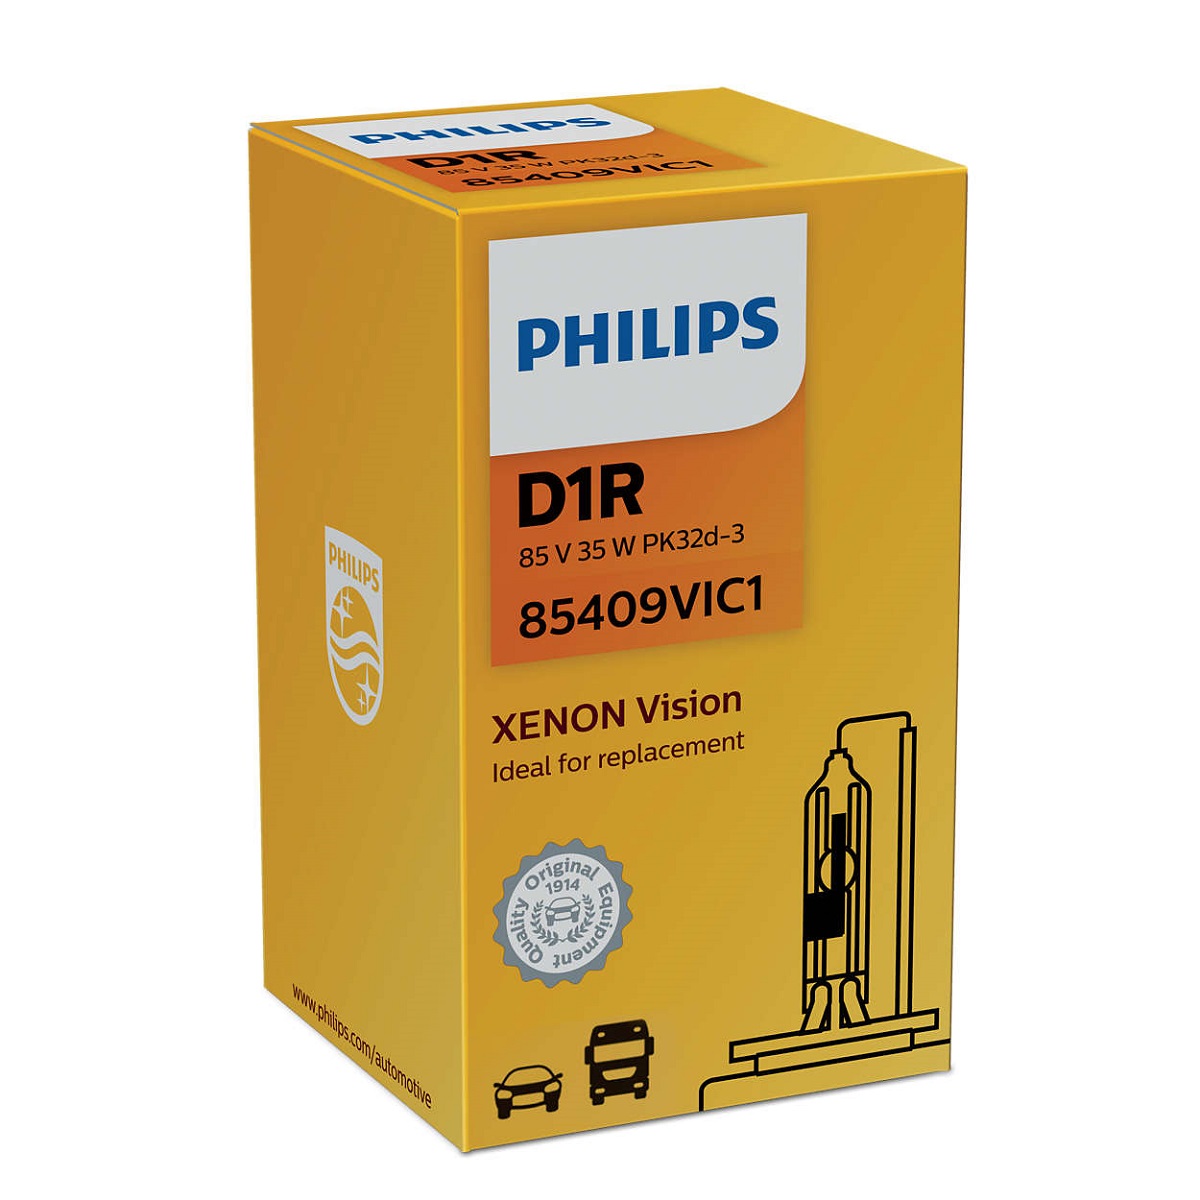 PHILIPS XENON VISION (D1R, 85409VIC1/85409VIS1)